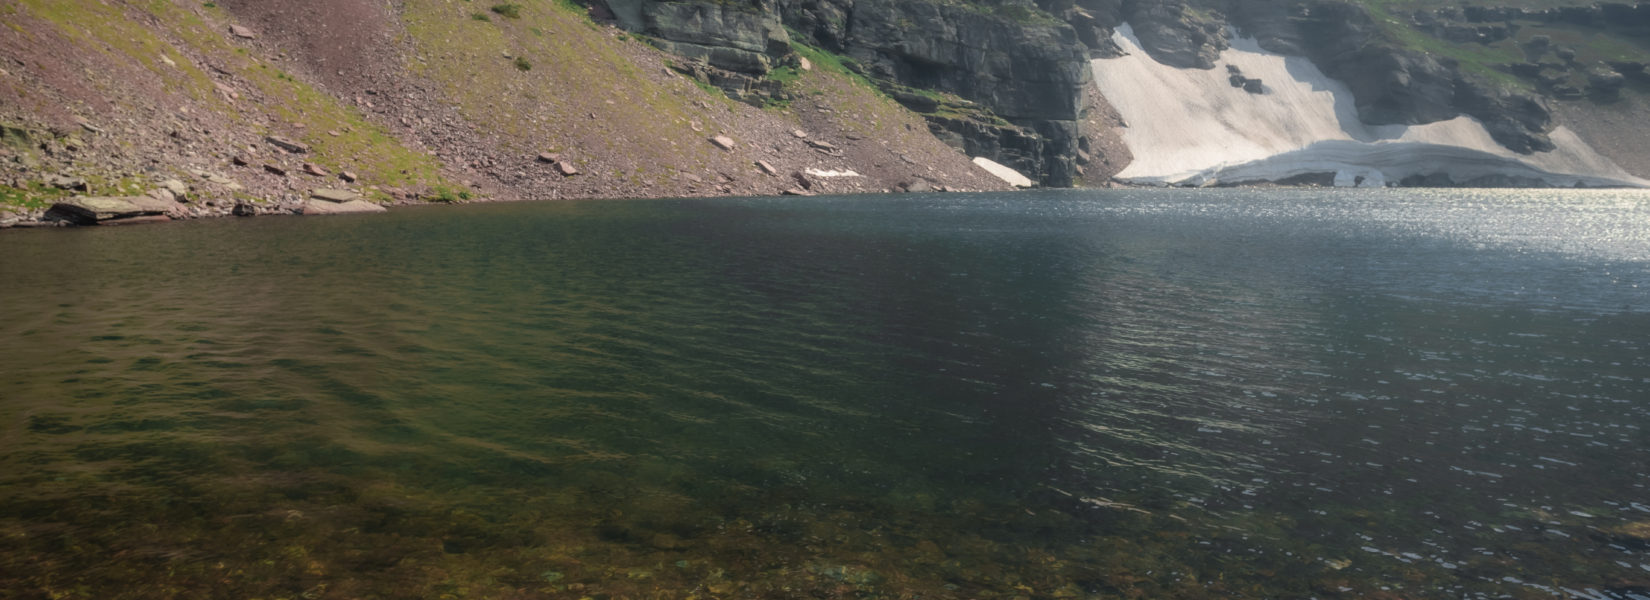 Backpacking or Hiking to Cobalt Lake in Glacier National Park